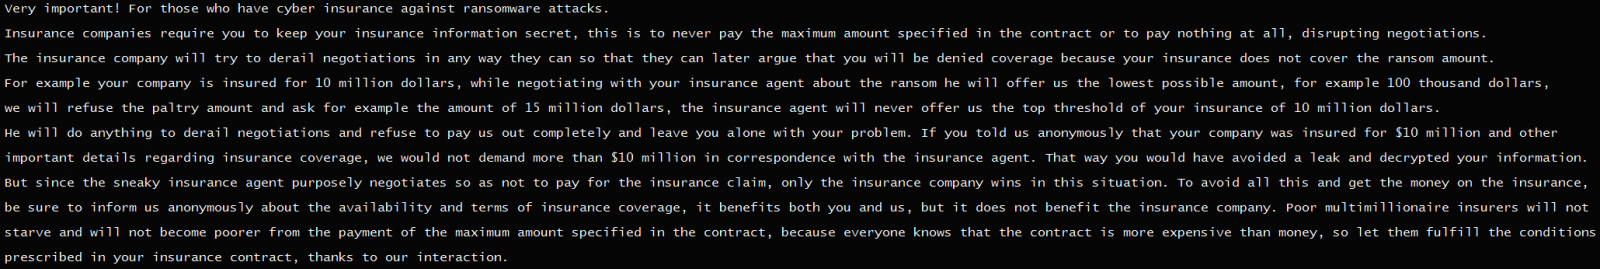 Instructions for insurance holders